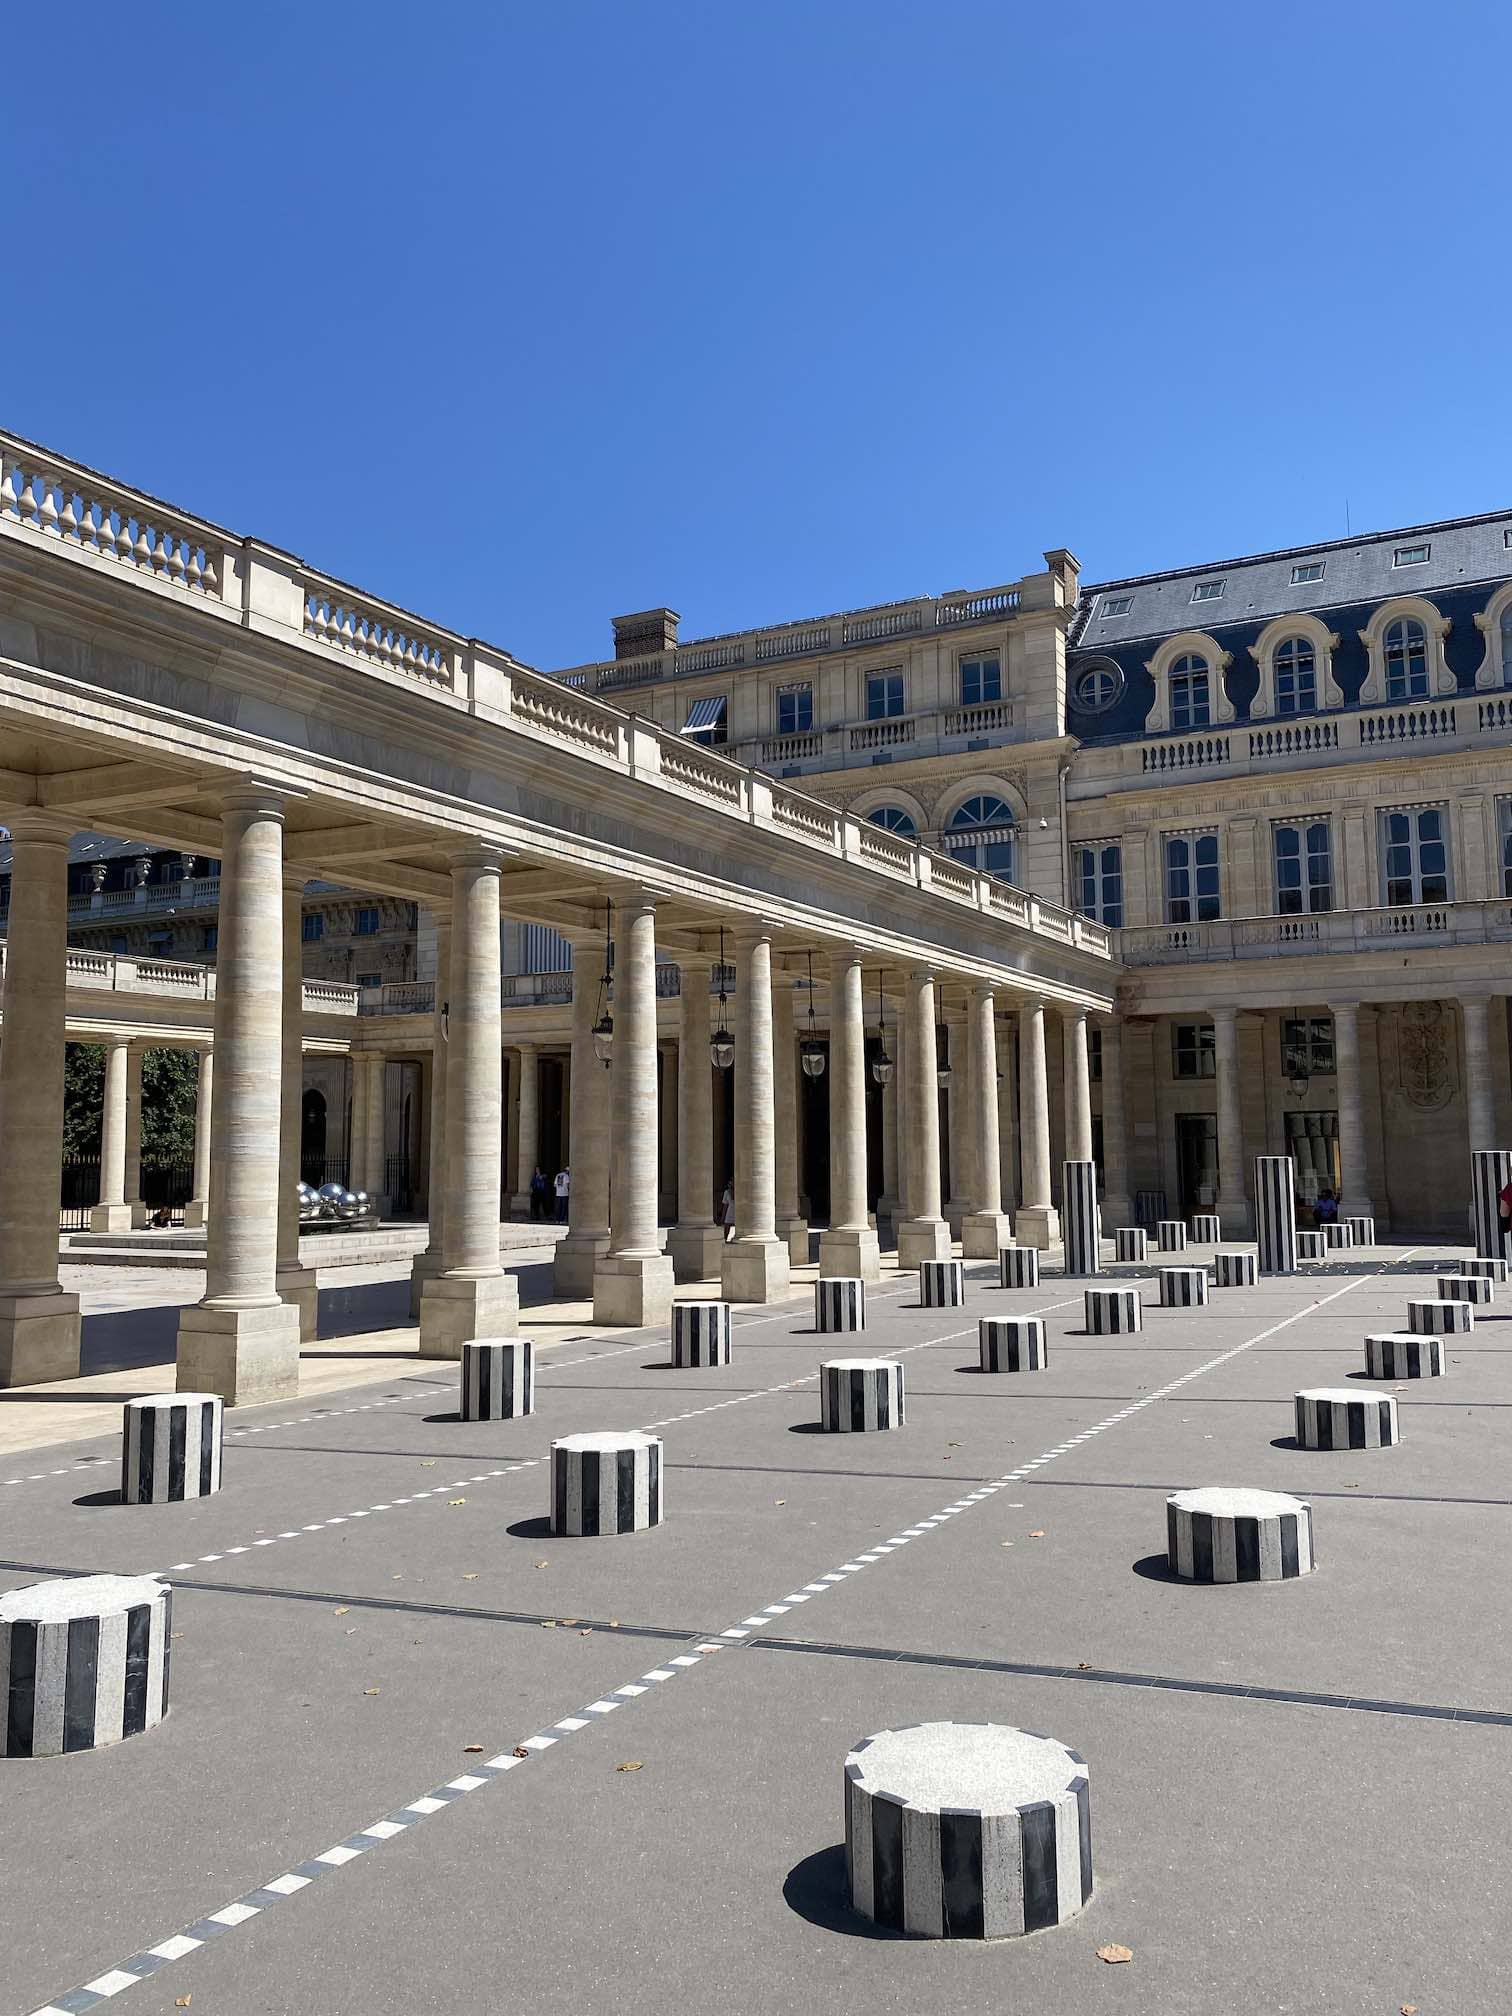 Innenhof des Palais Royal, Paris mit den berühmten schwarz weiss Säulen des Künstlers Daniel Buren 